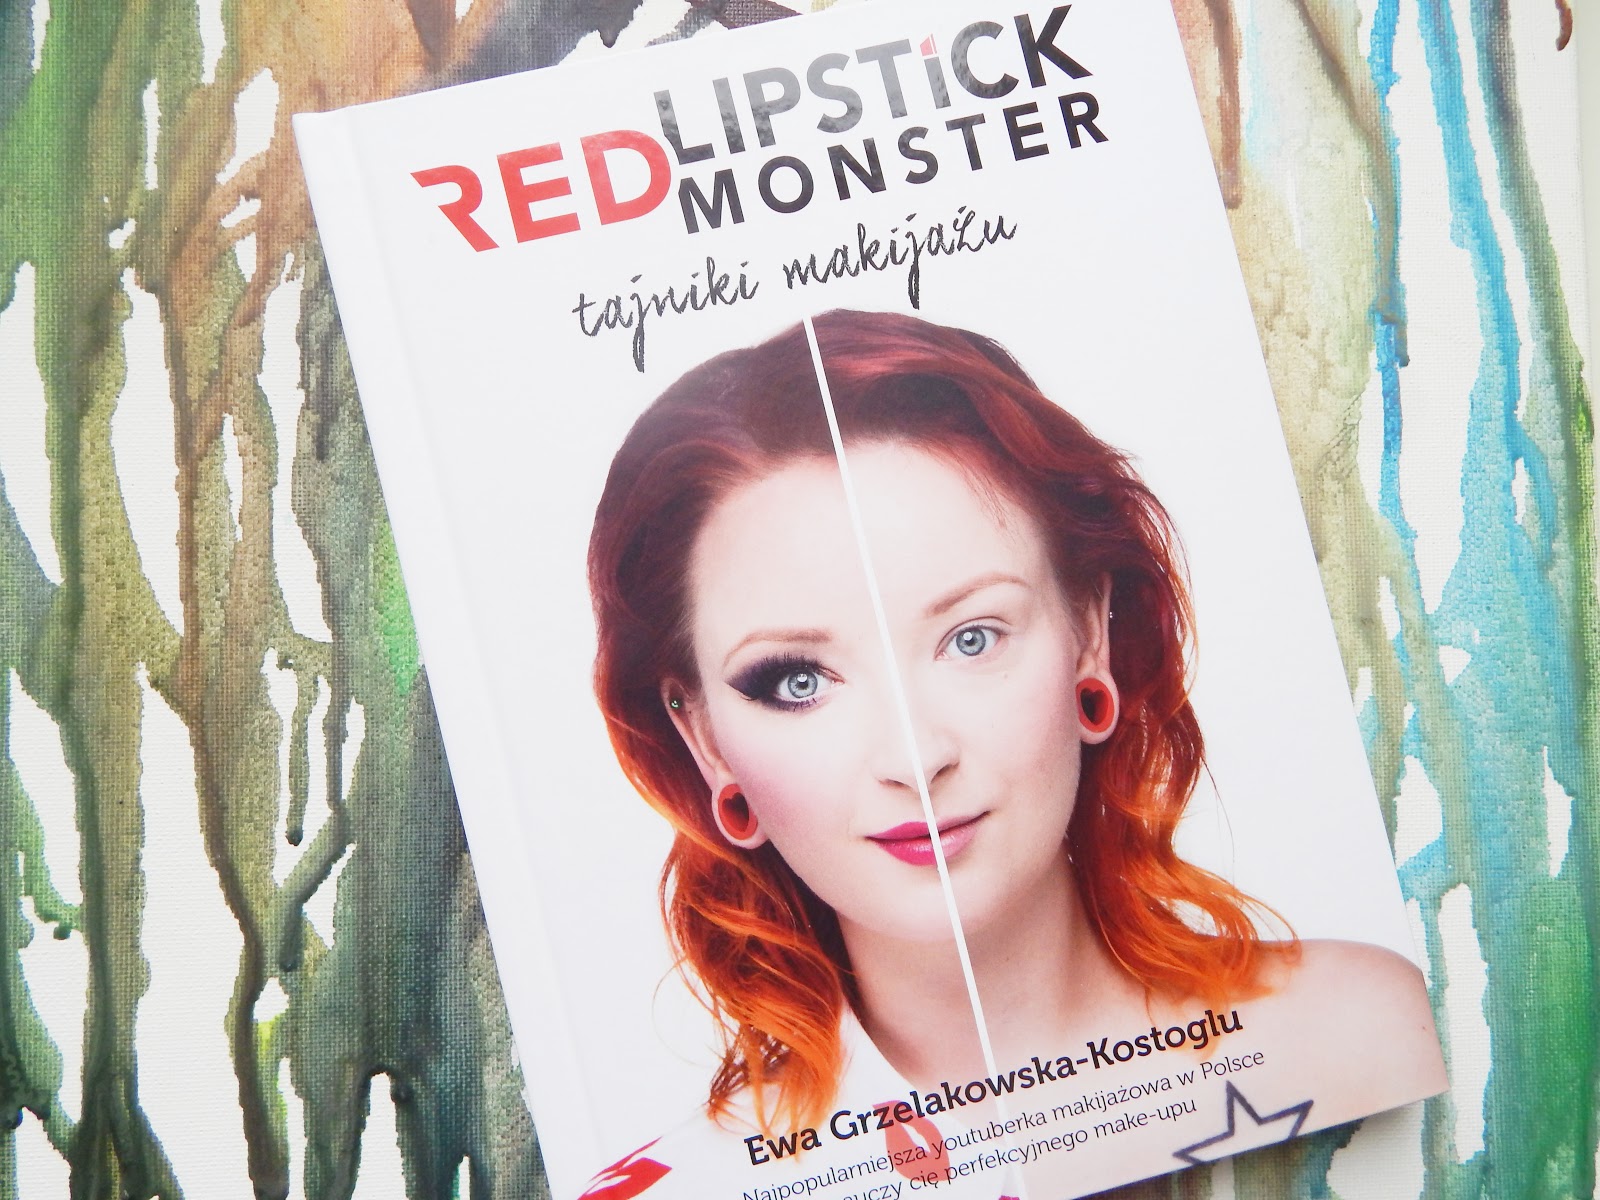 Red Lipstick Monster Tajniki MakijaŻu Recenzja Agnieszka Jedrzejewska 6704